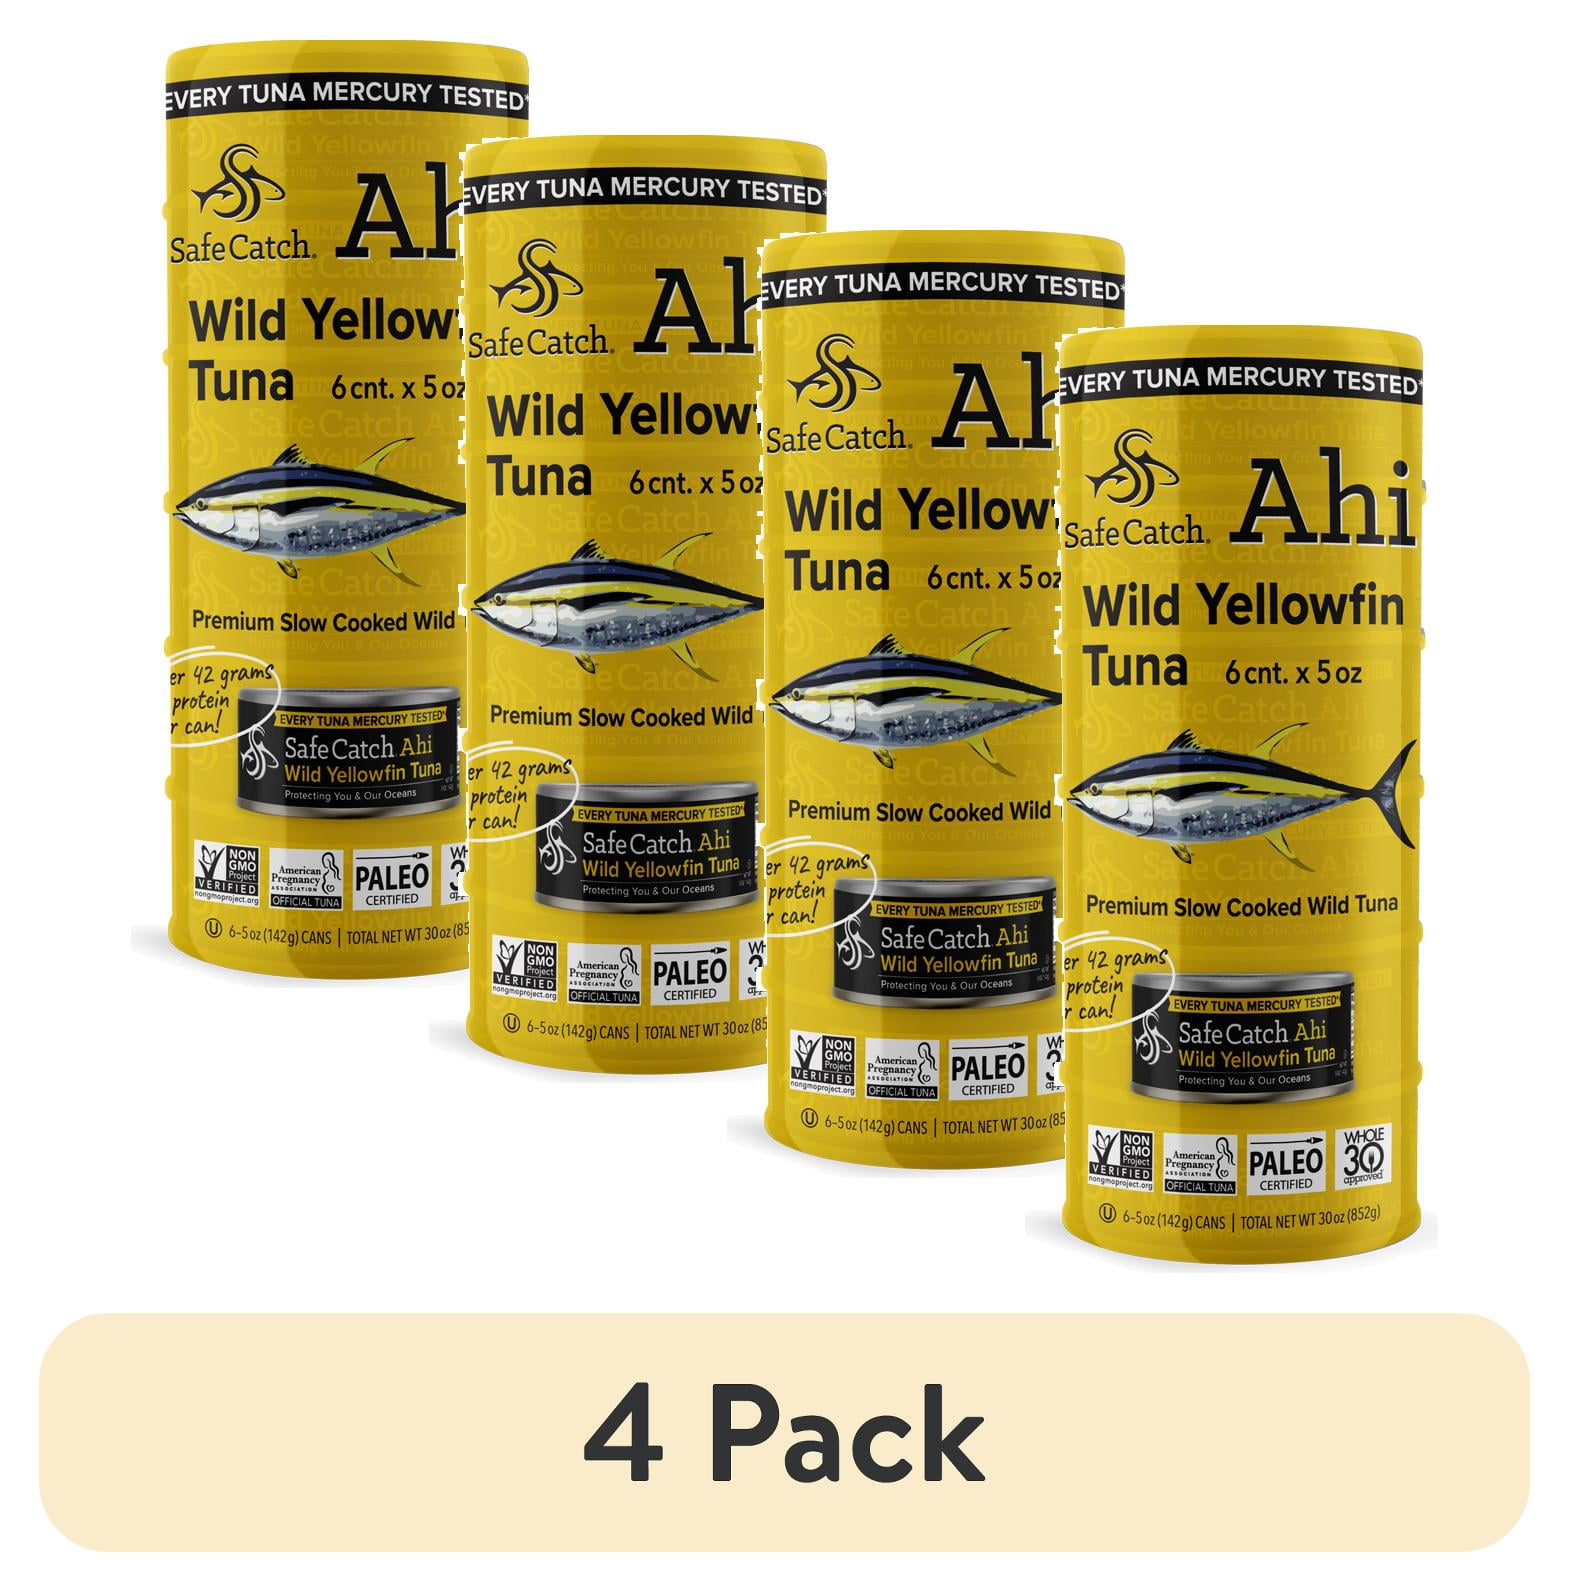 4 pack) Safe Catch Ahi Wild Yellowfin Tuna, 5 Oz, 6 Count 